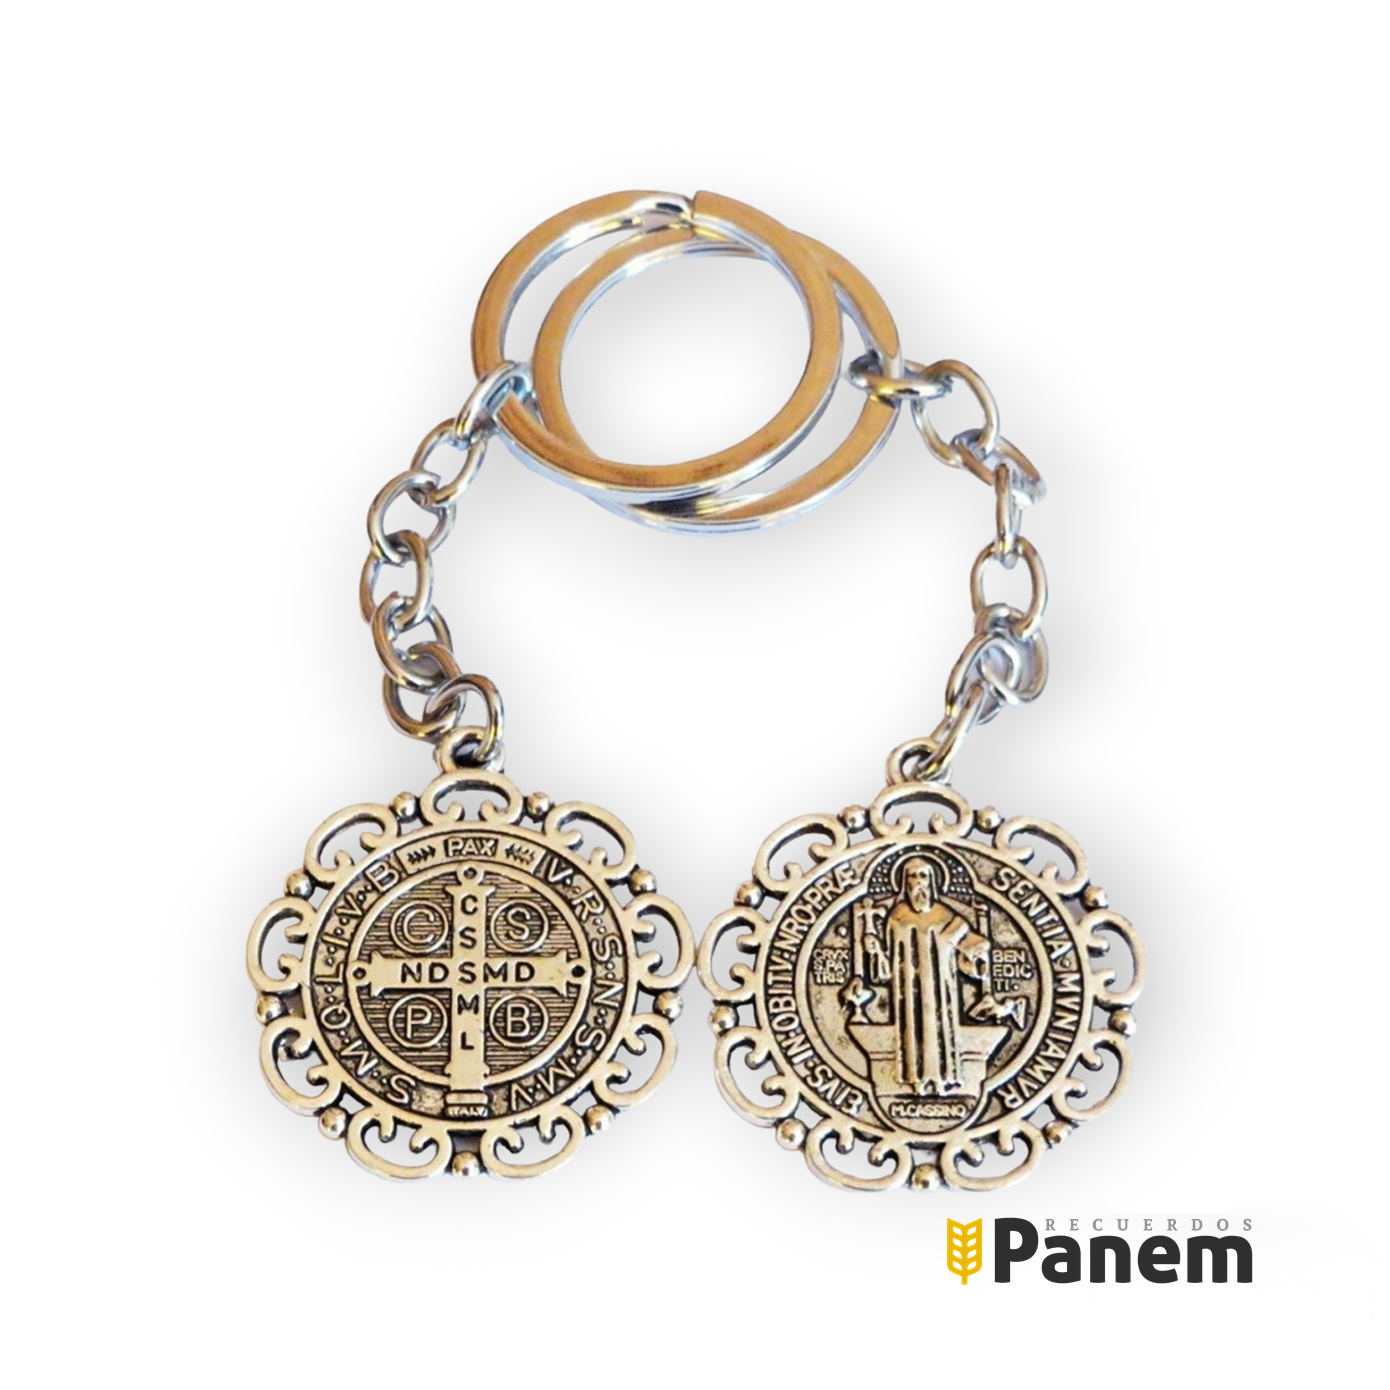 Llaveros medalla San Benito (Valor por docena) - Recuerdos Panem